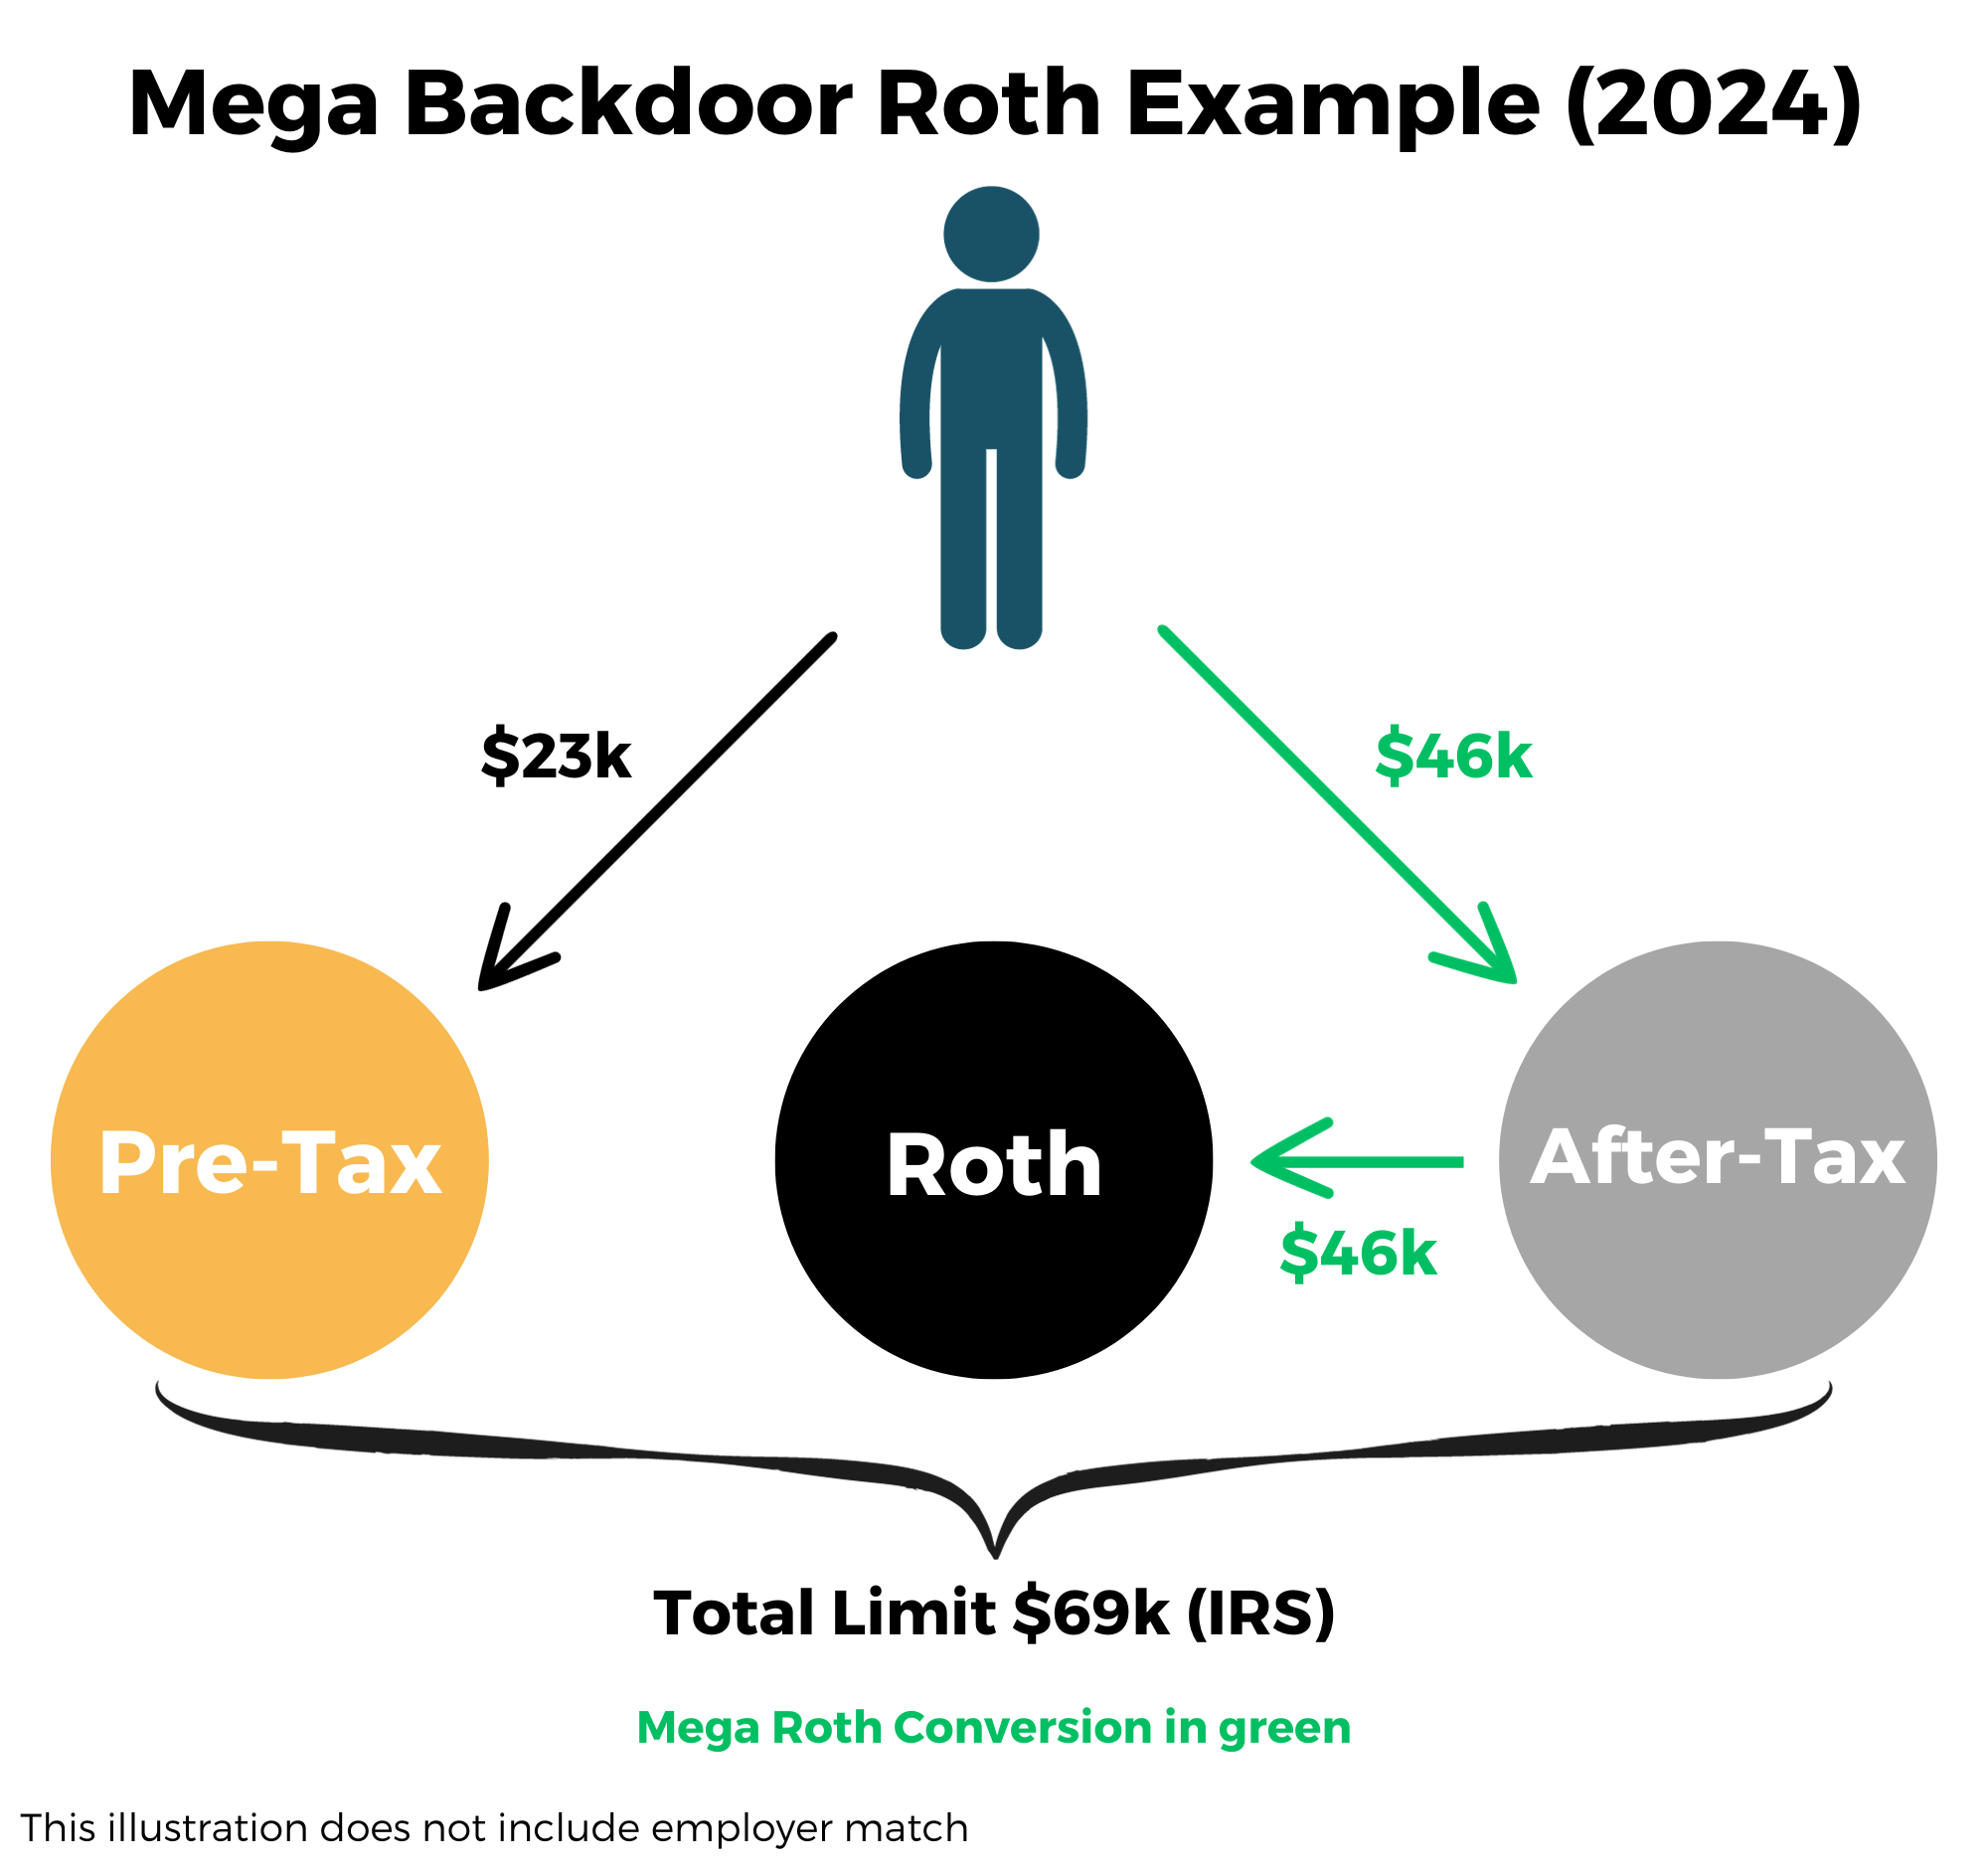 Mega Backdoor Roth Example 2024